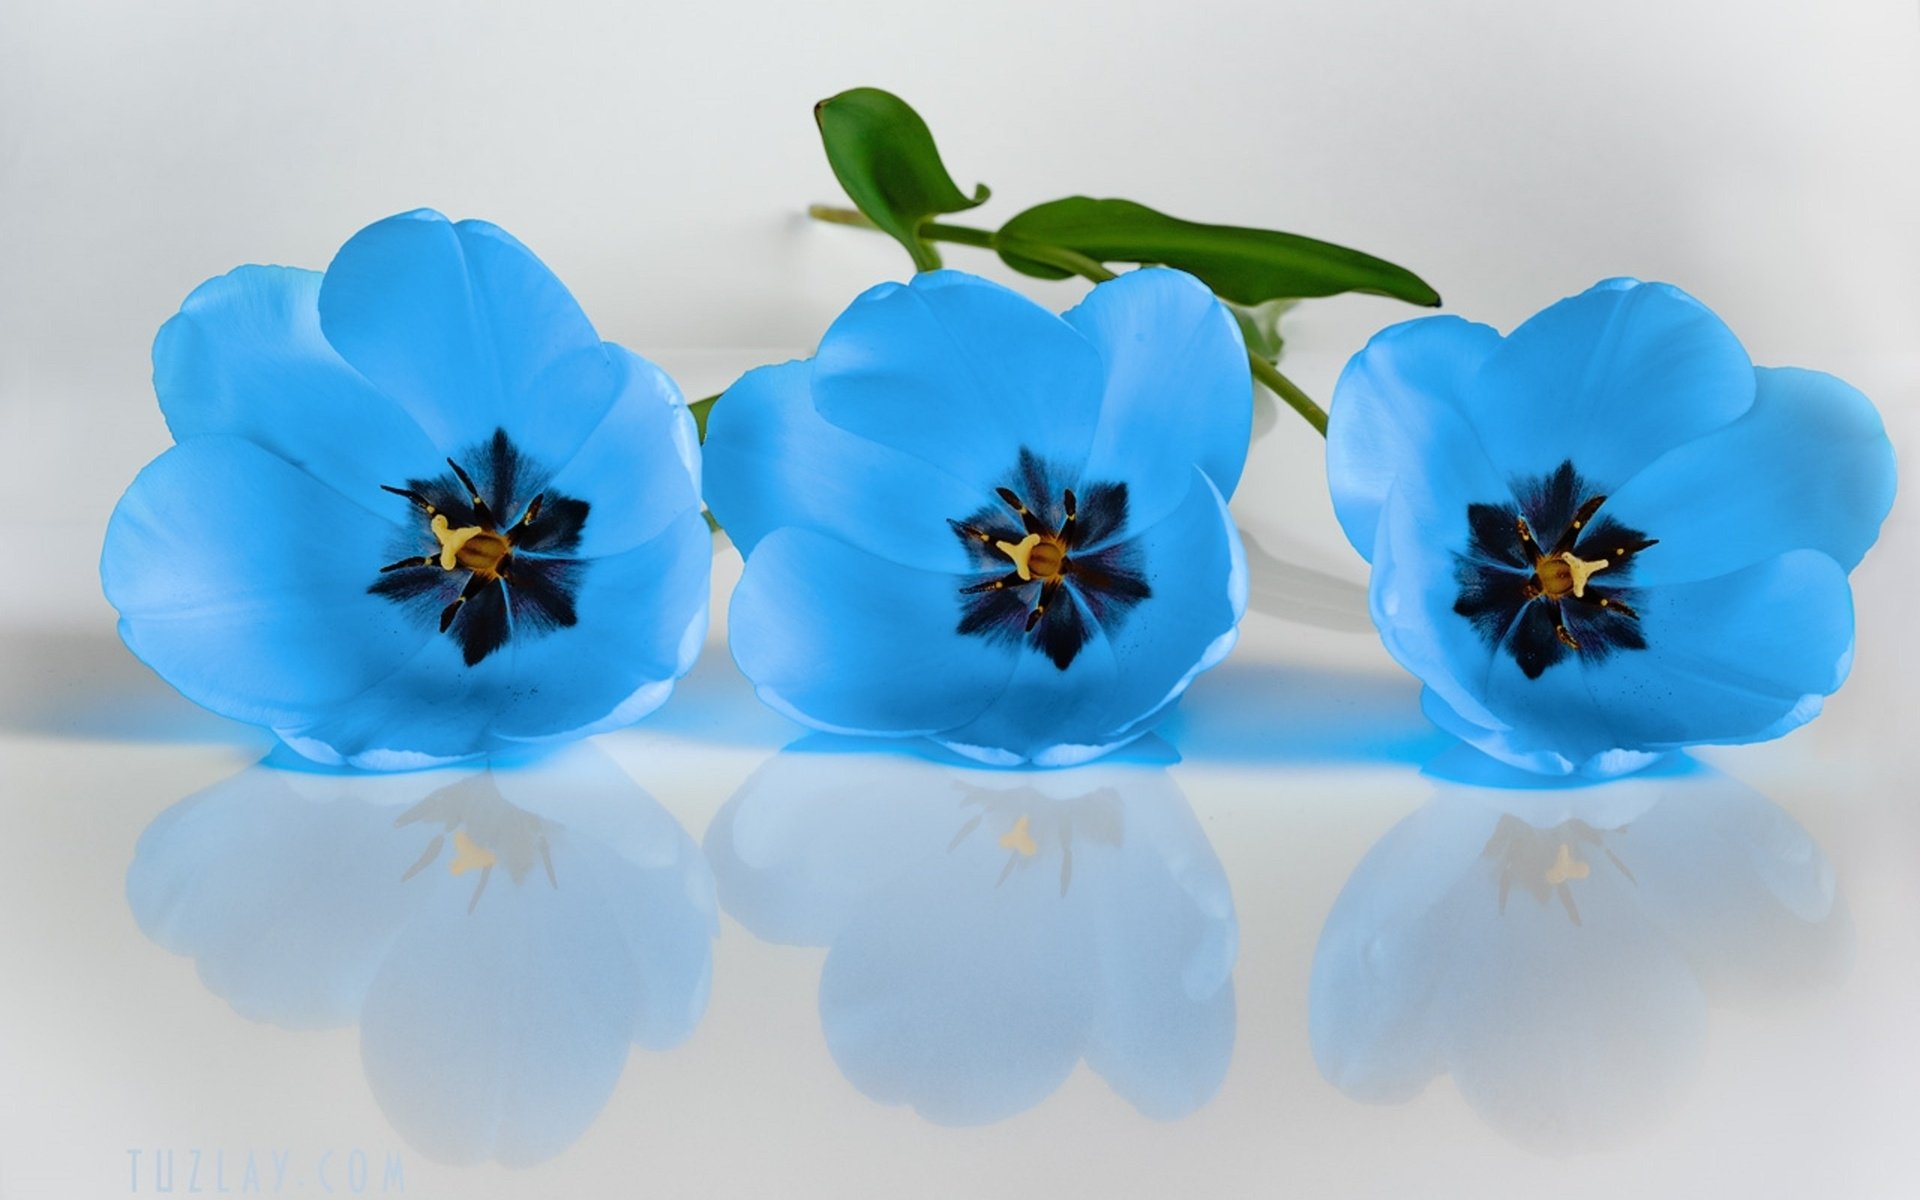 blue tulips wallpaper